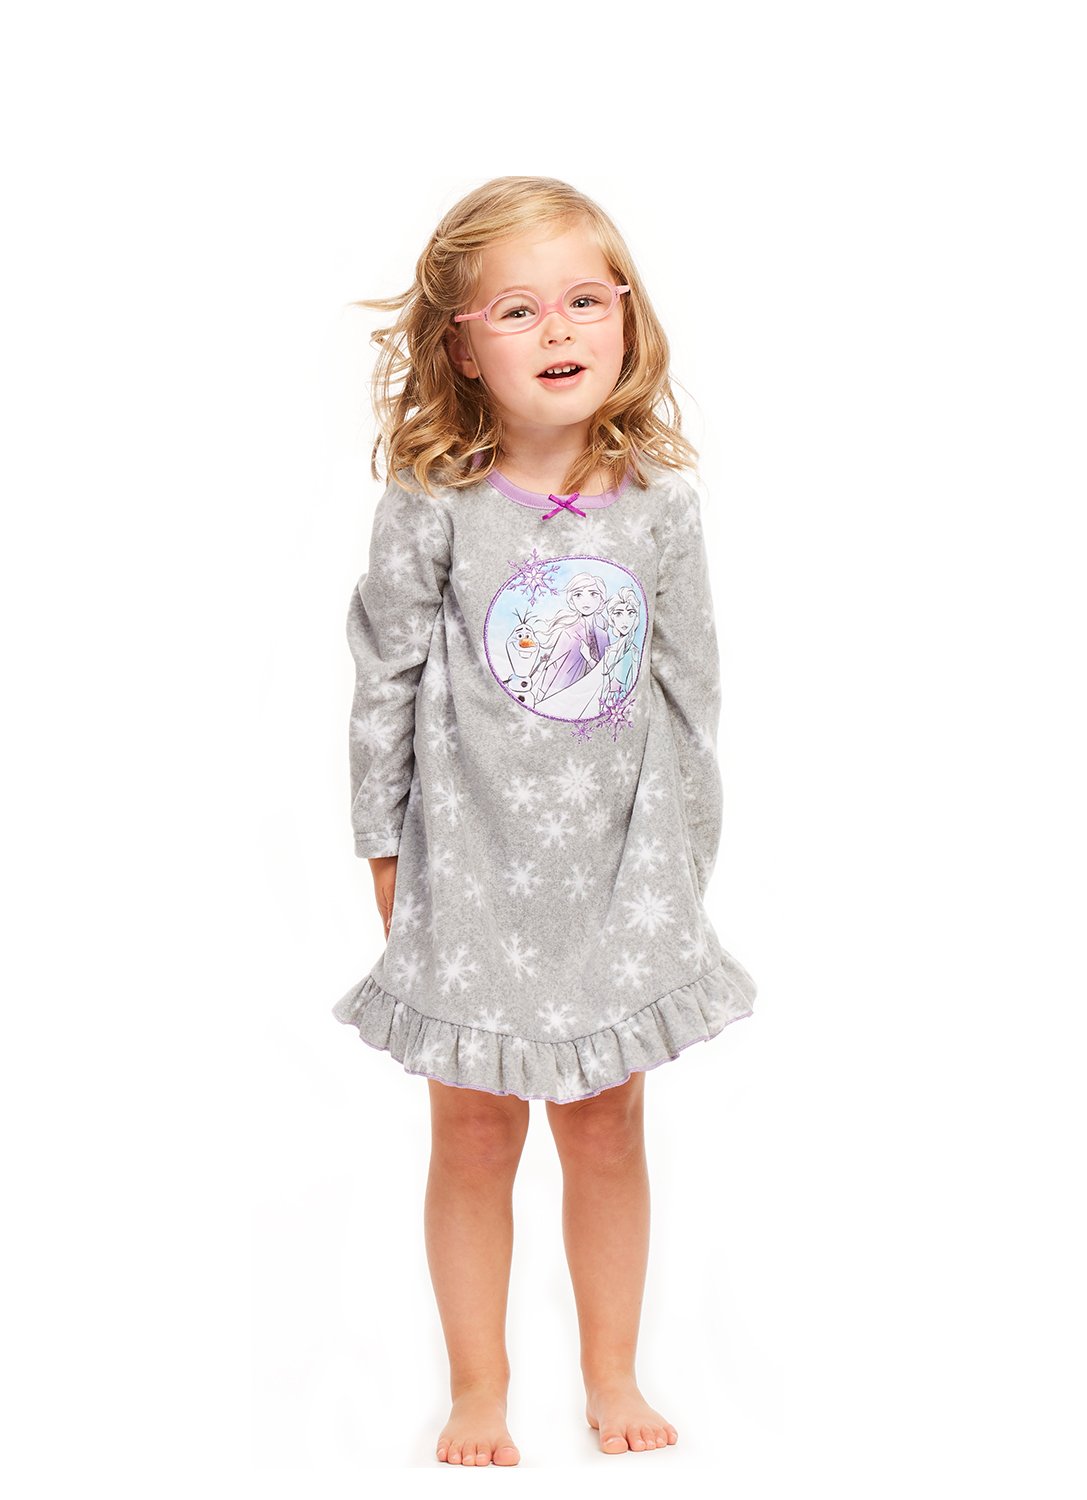 Little Girl wearing Frozen 2 Gray Sleep Gown